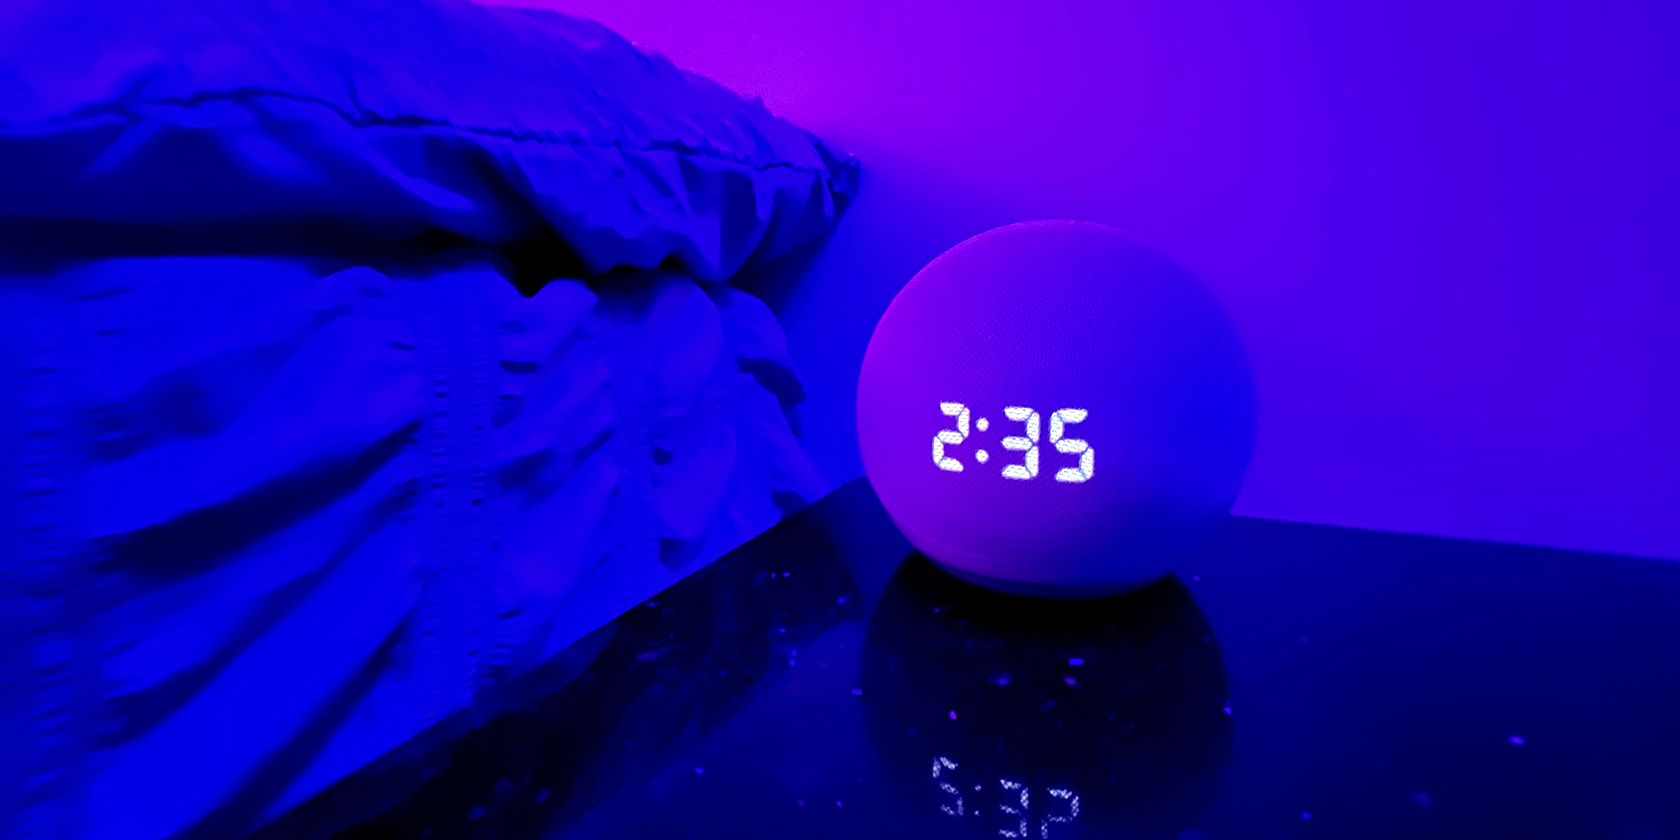 bedside echo dot with clock nighttime